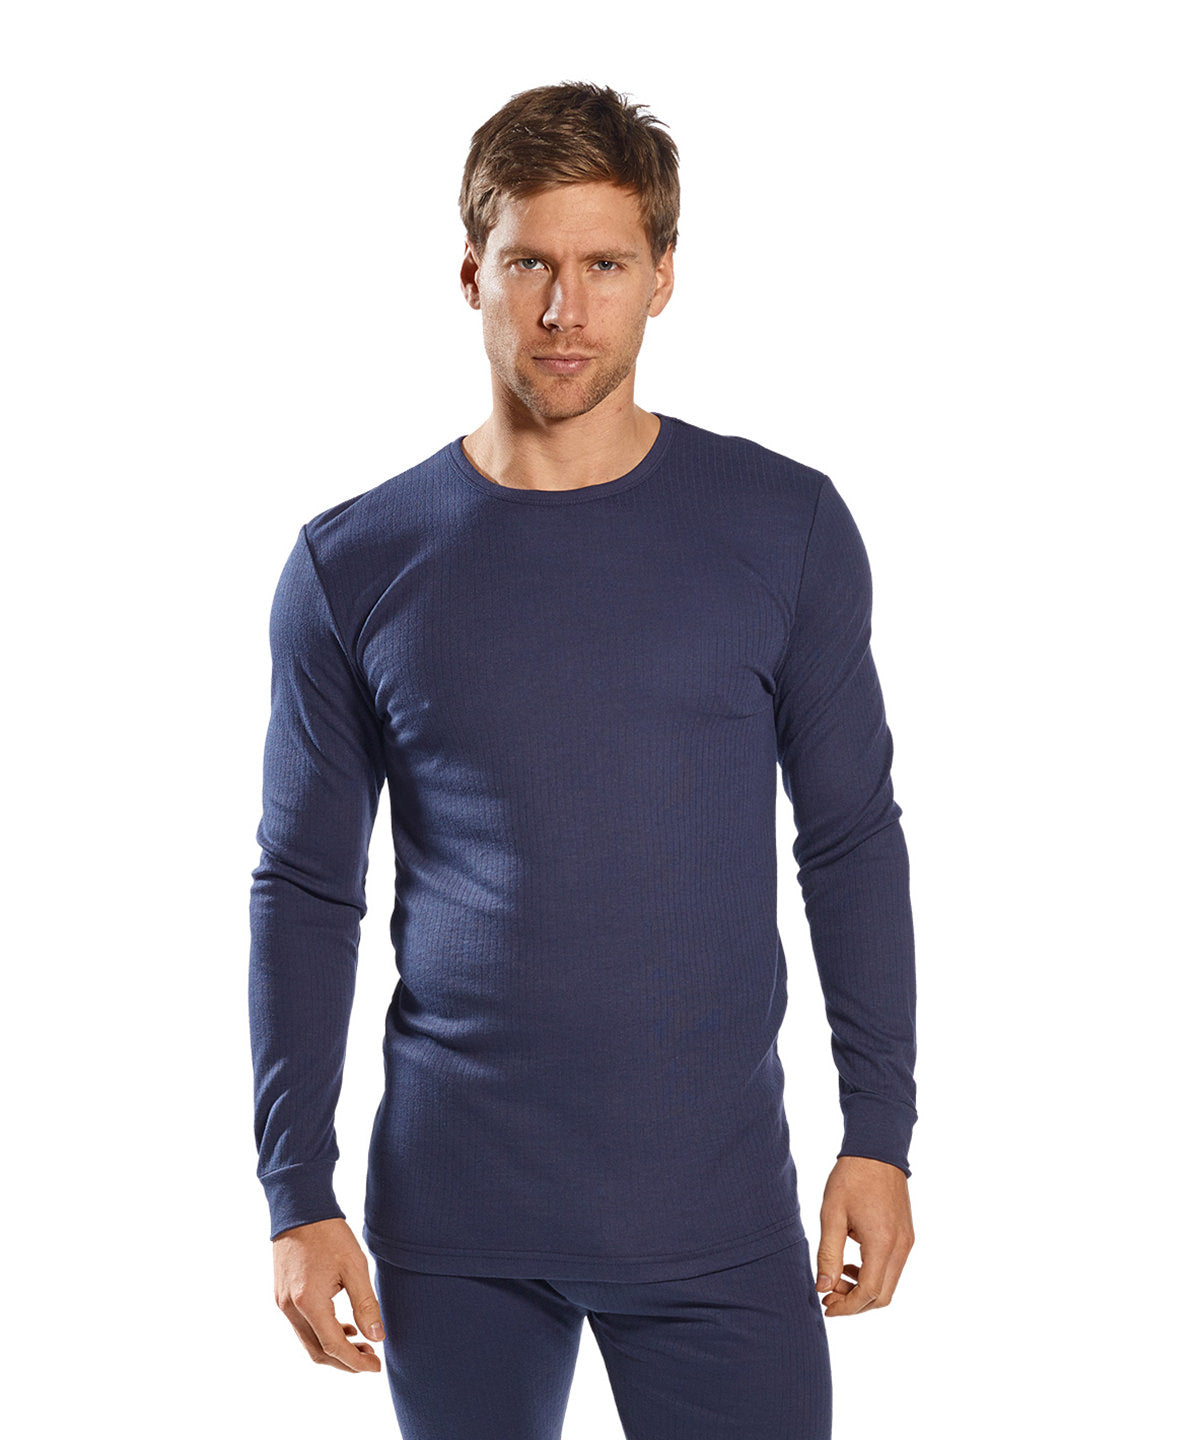 Thermal Tops - Thermal T-shirt Long Sleeved (B123)